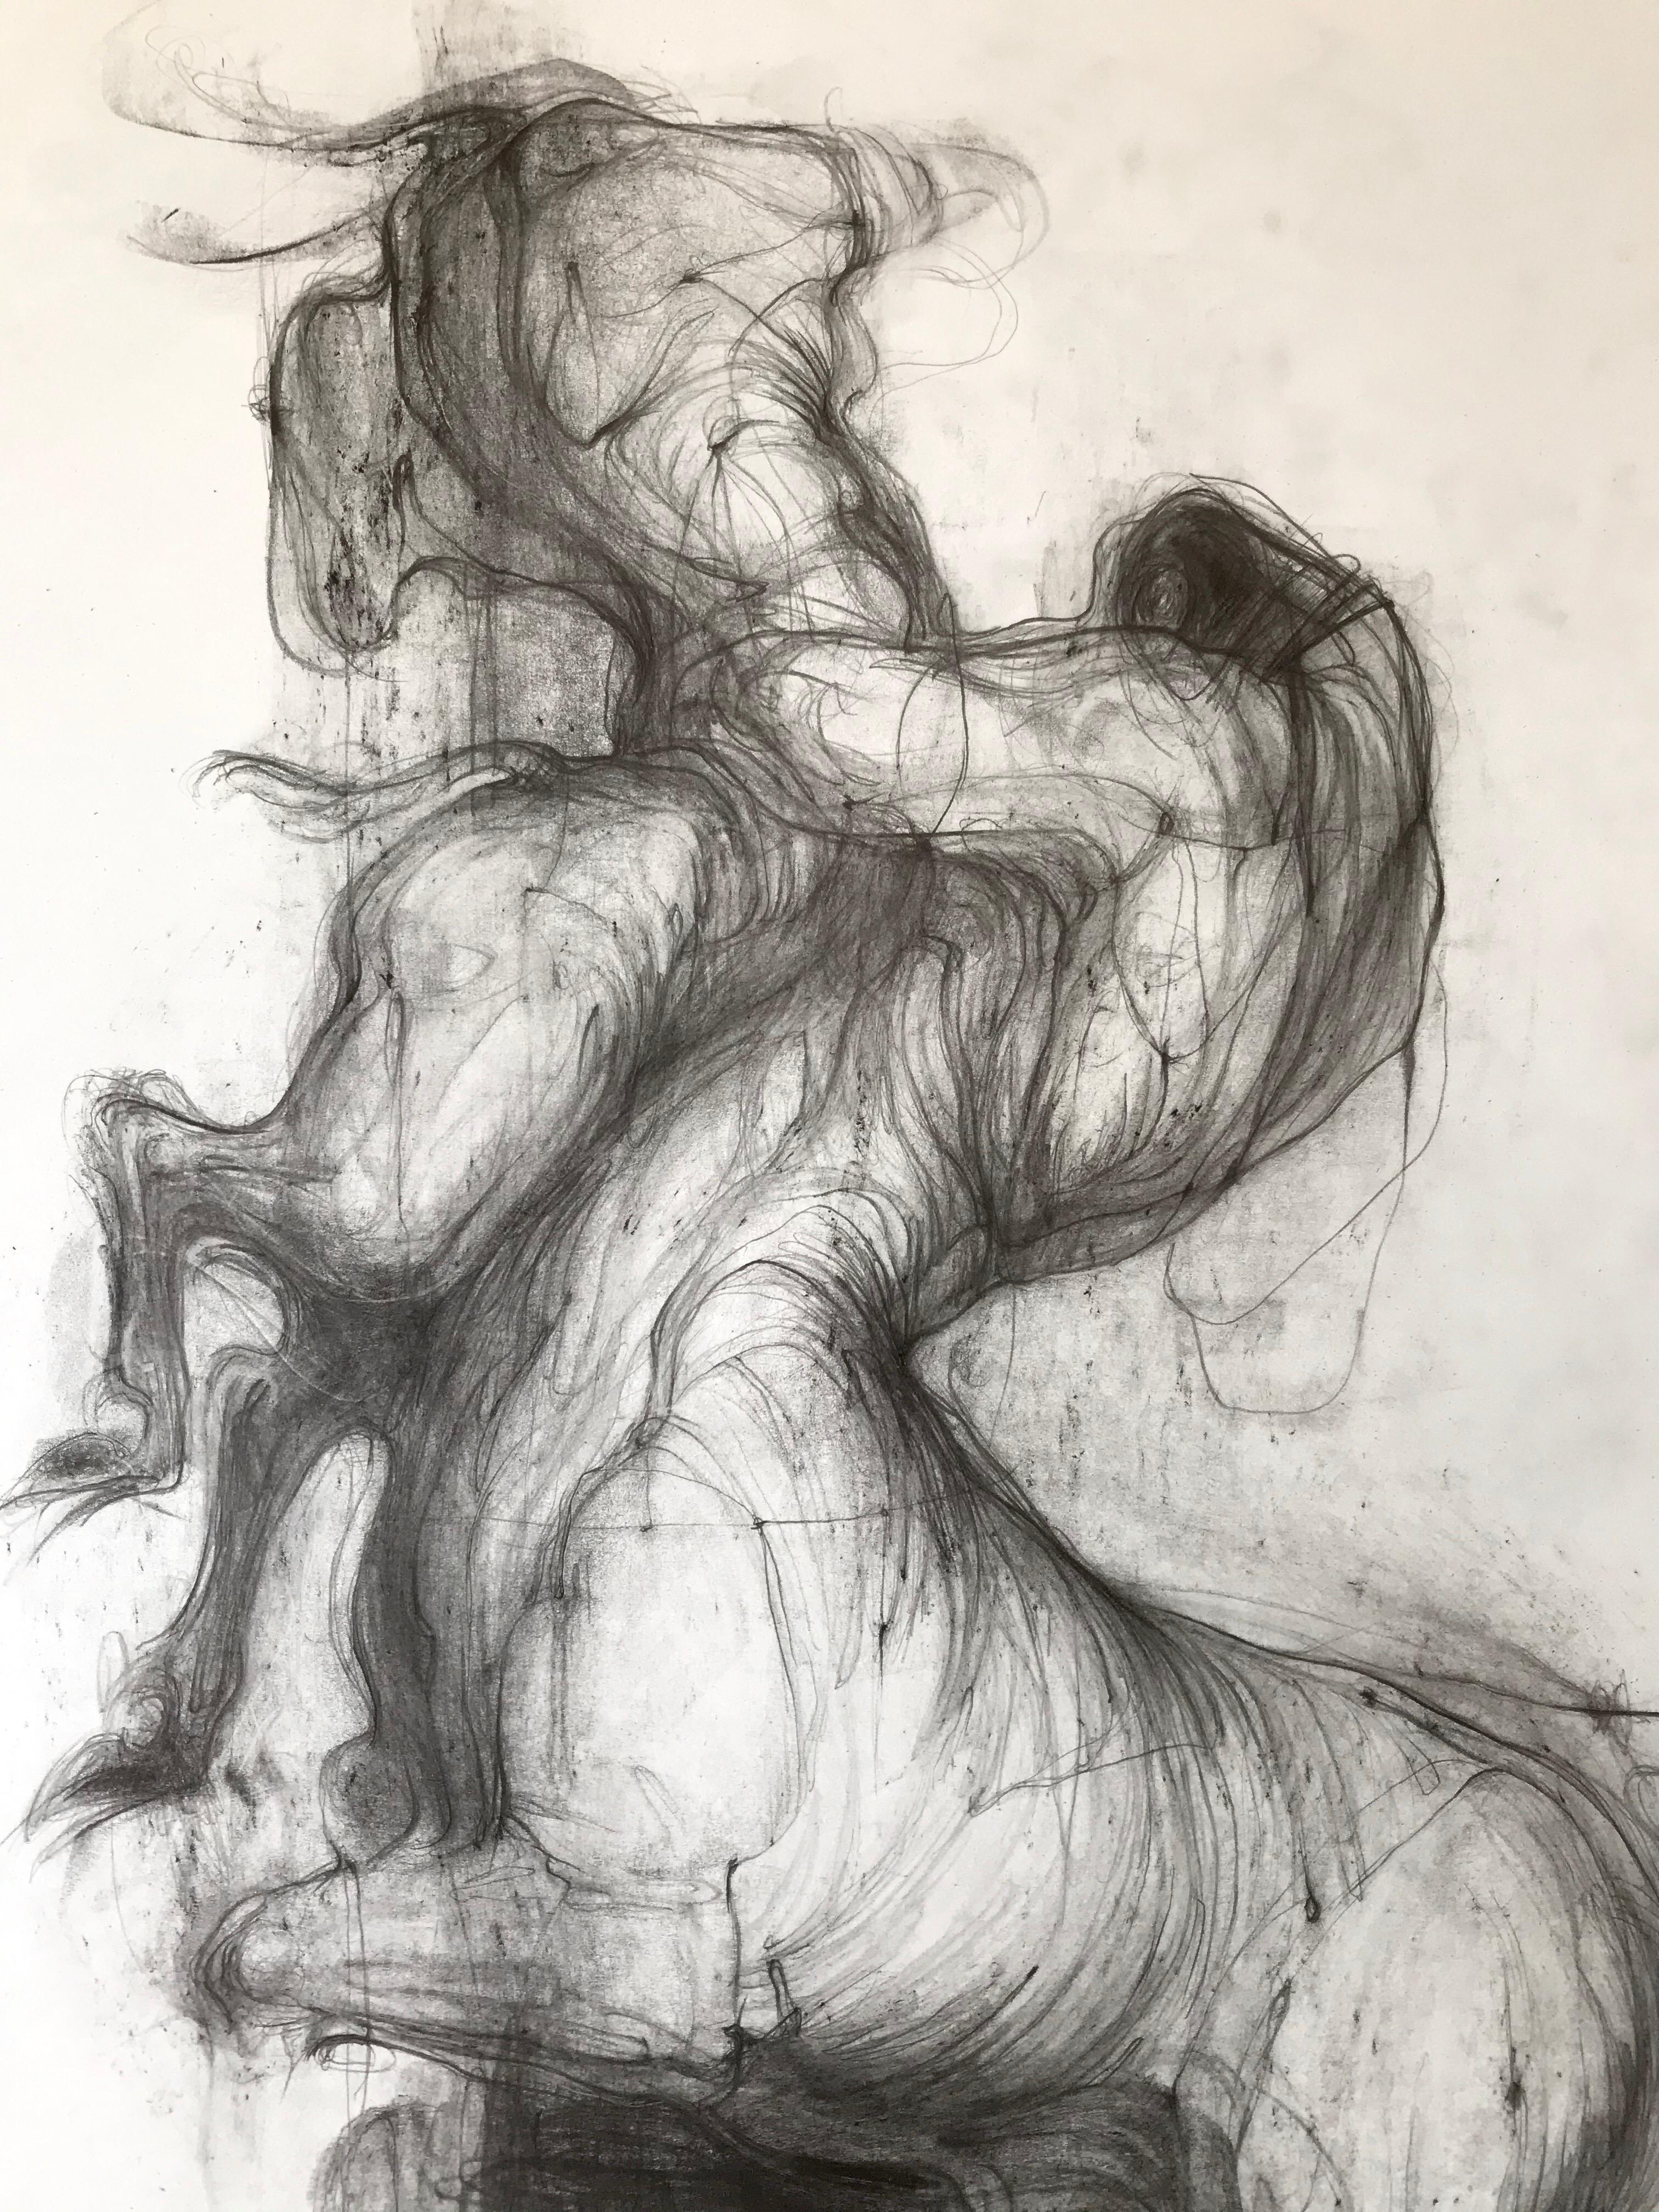 Hot afternoon (minotaur, centaur) - expressive line drawing  - Art by Dimitrii Drugakov